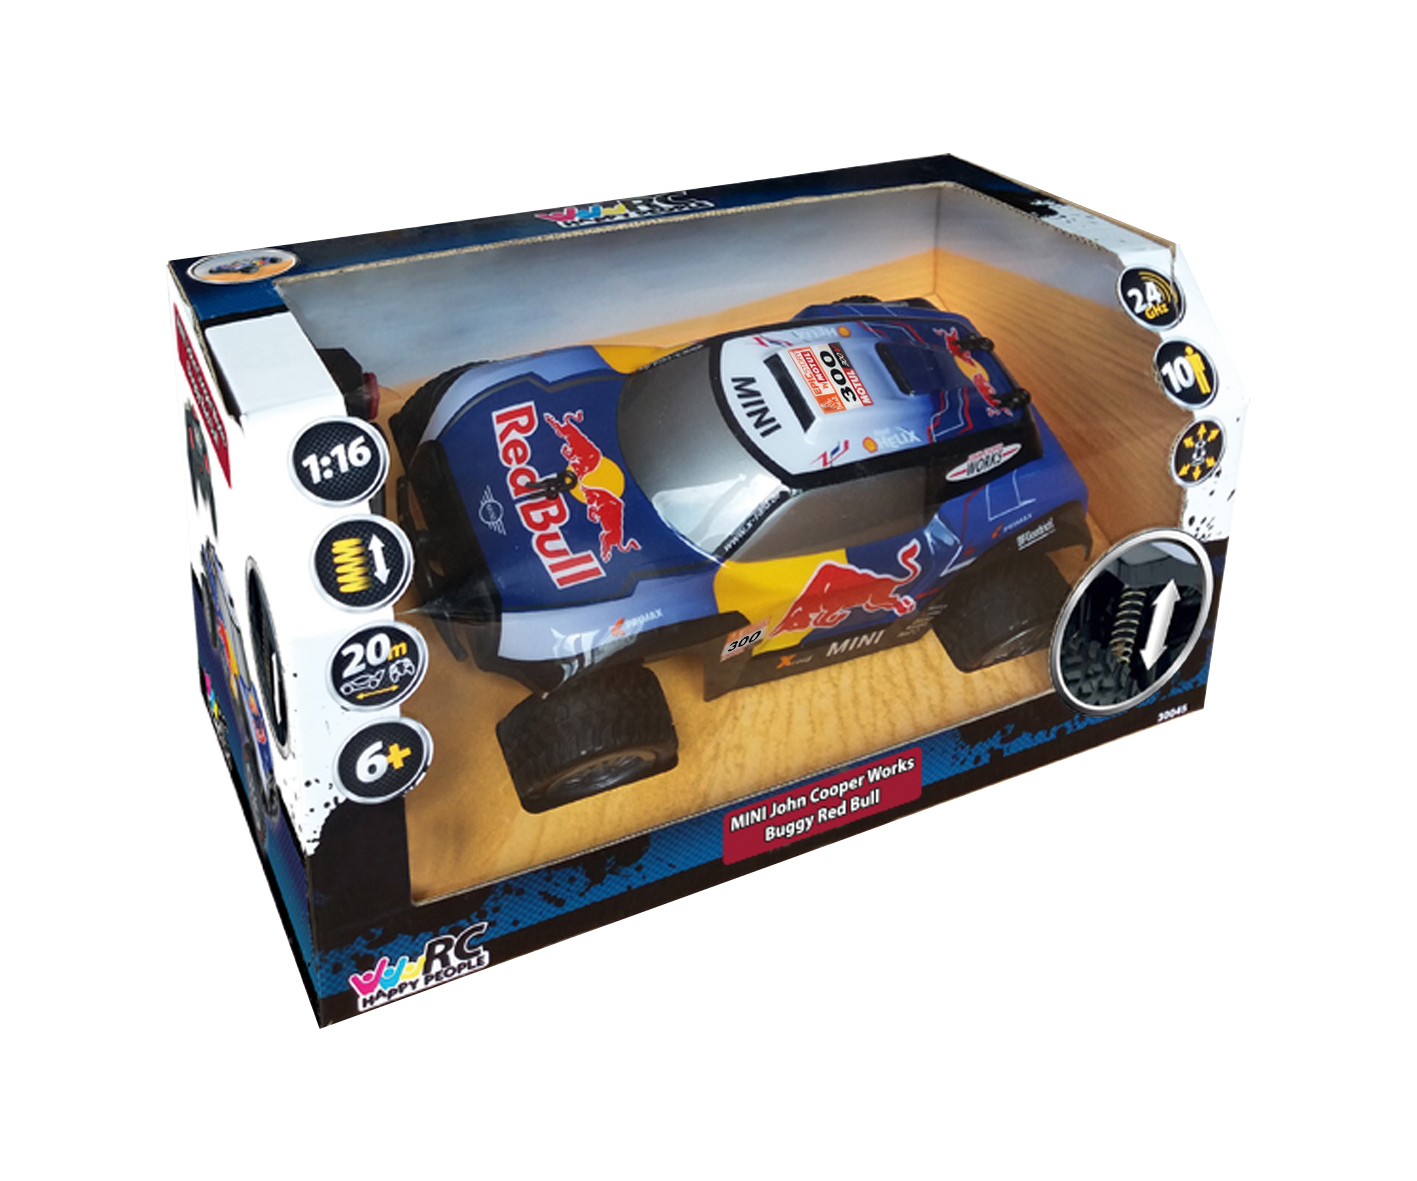 MINI John Cooper Works "Red Bull" - Fahrzeug - ferngesteuert 